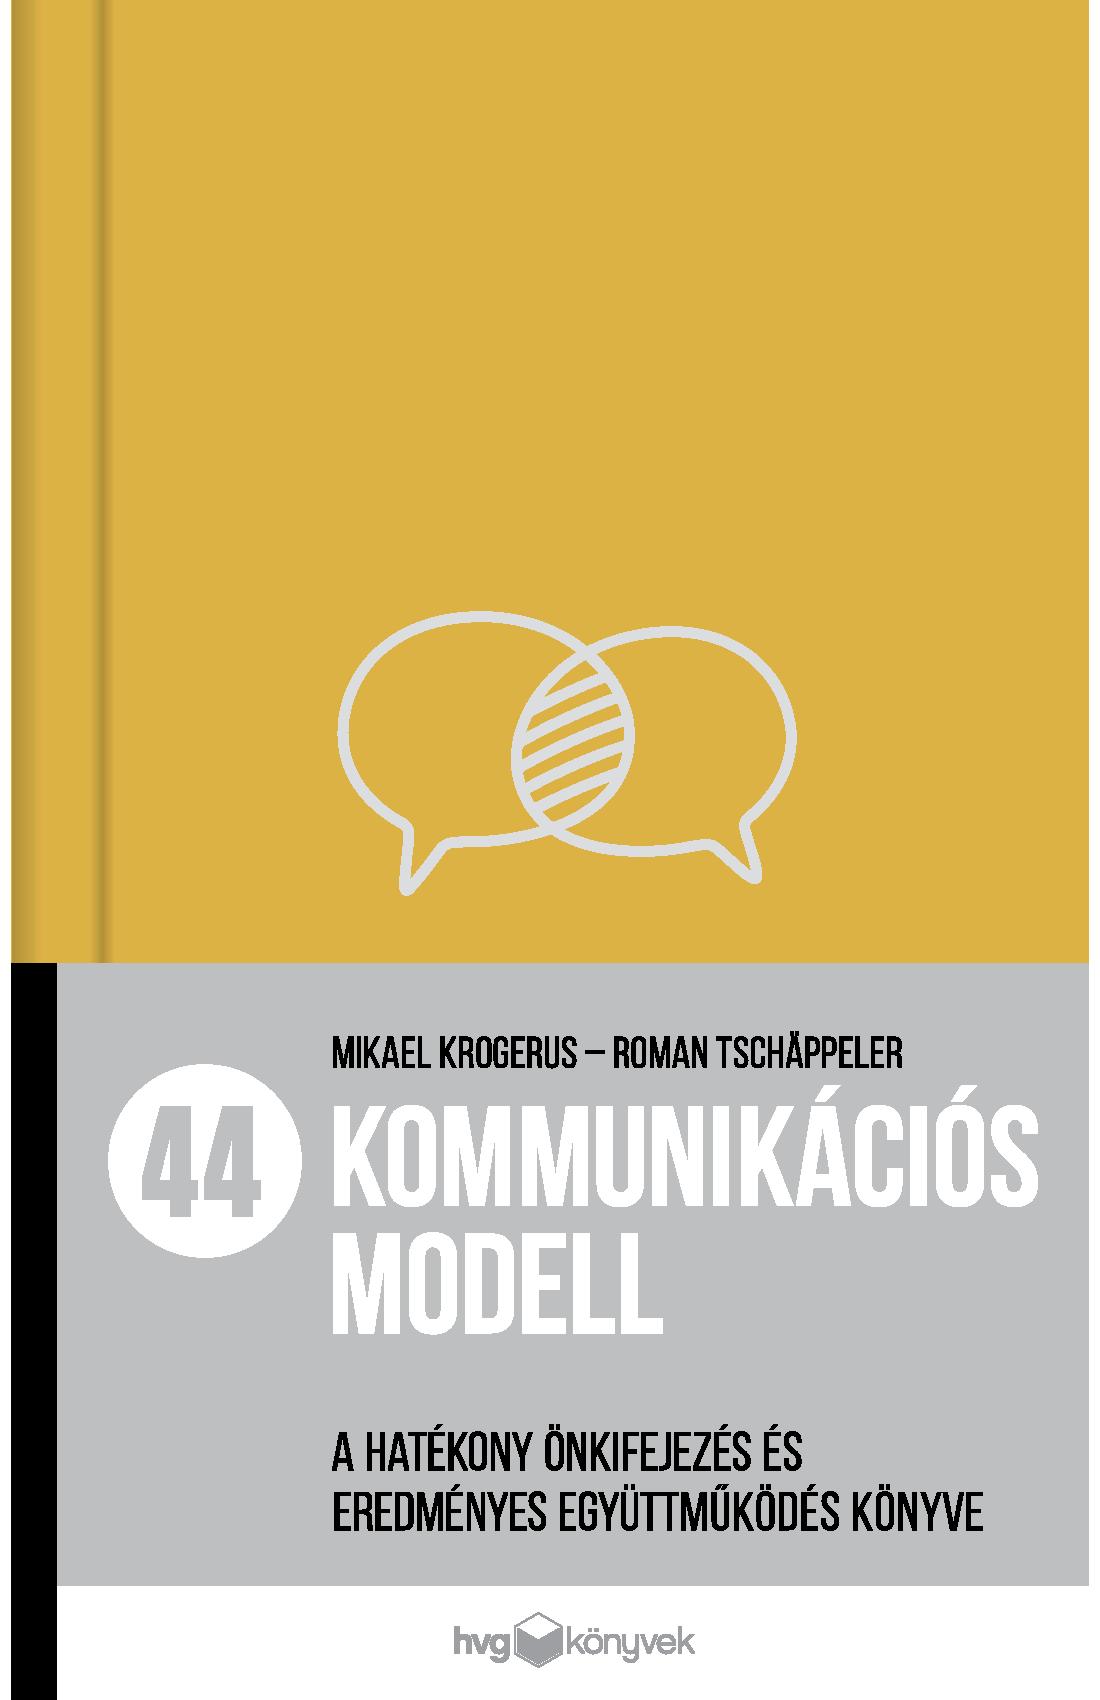 Mikael Krogerus; Roman Tchäppeler - 44 kommunikációs modell